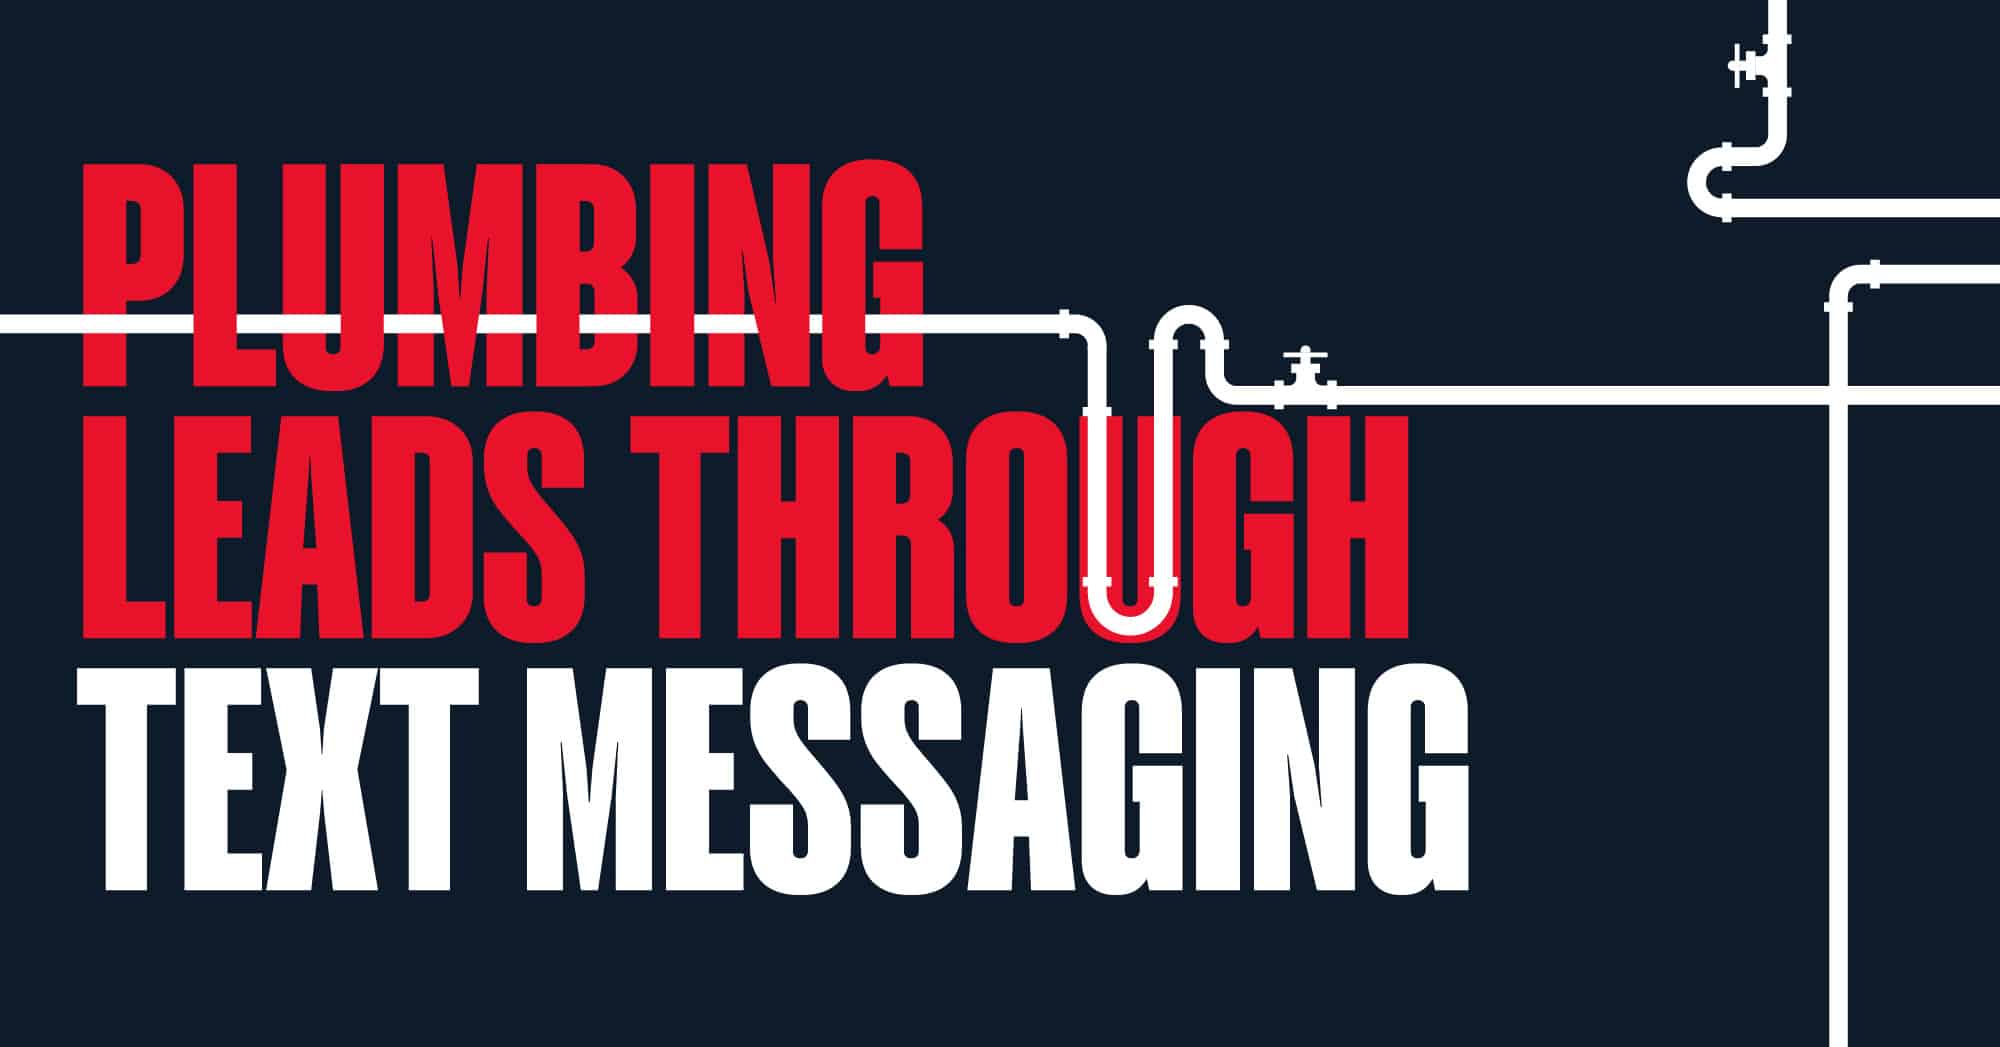 Plumbing leads through text messaging blog